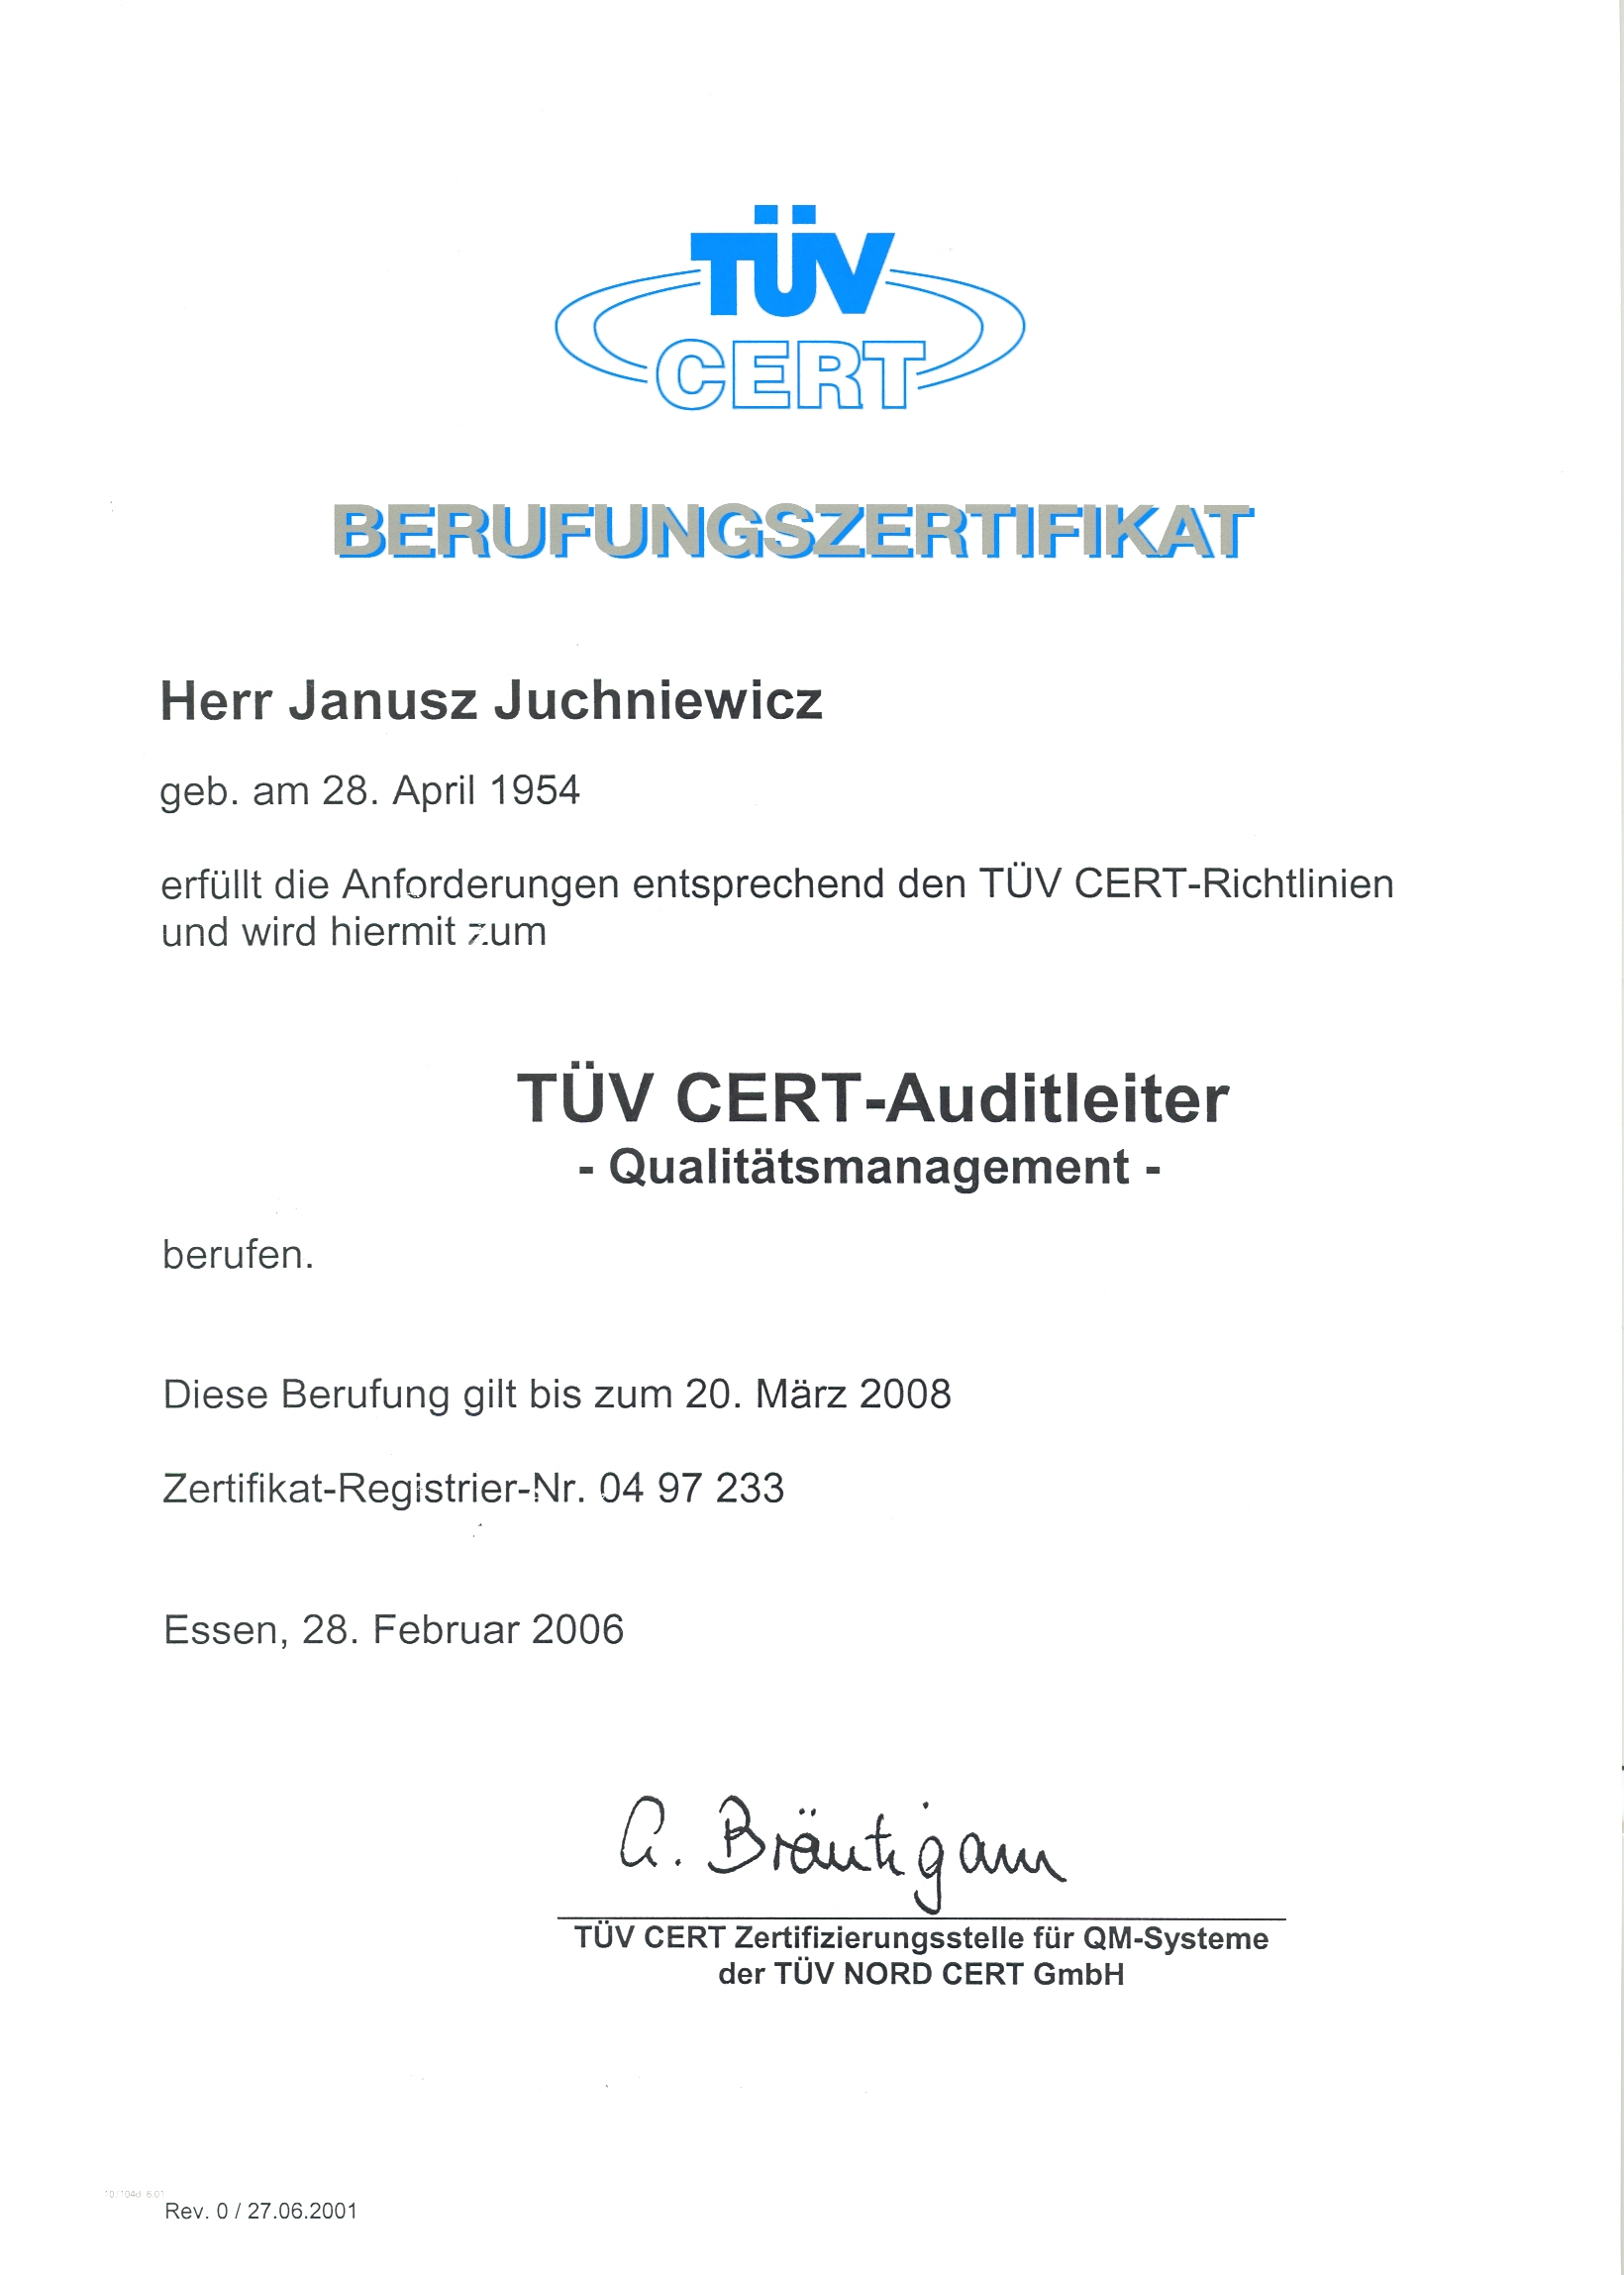 Certyfikat auditora wiodącego ISO 9001